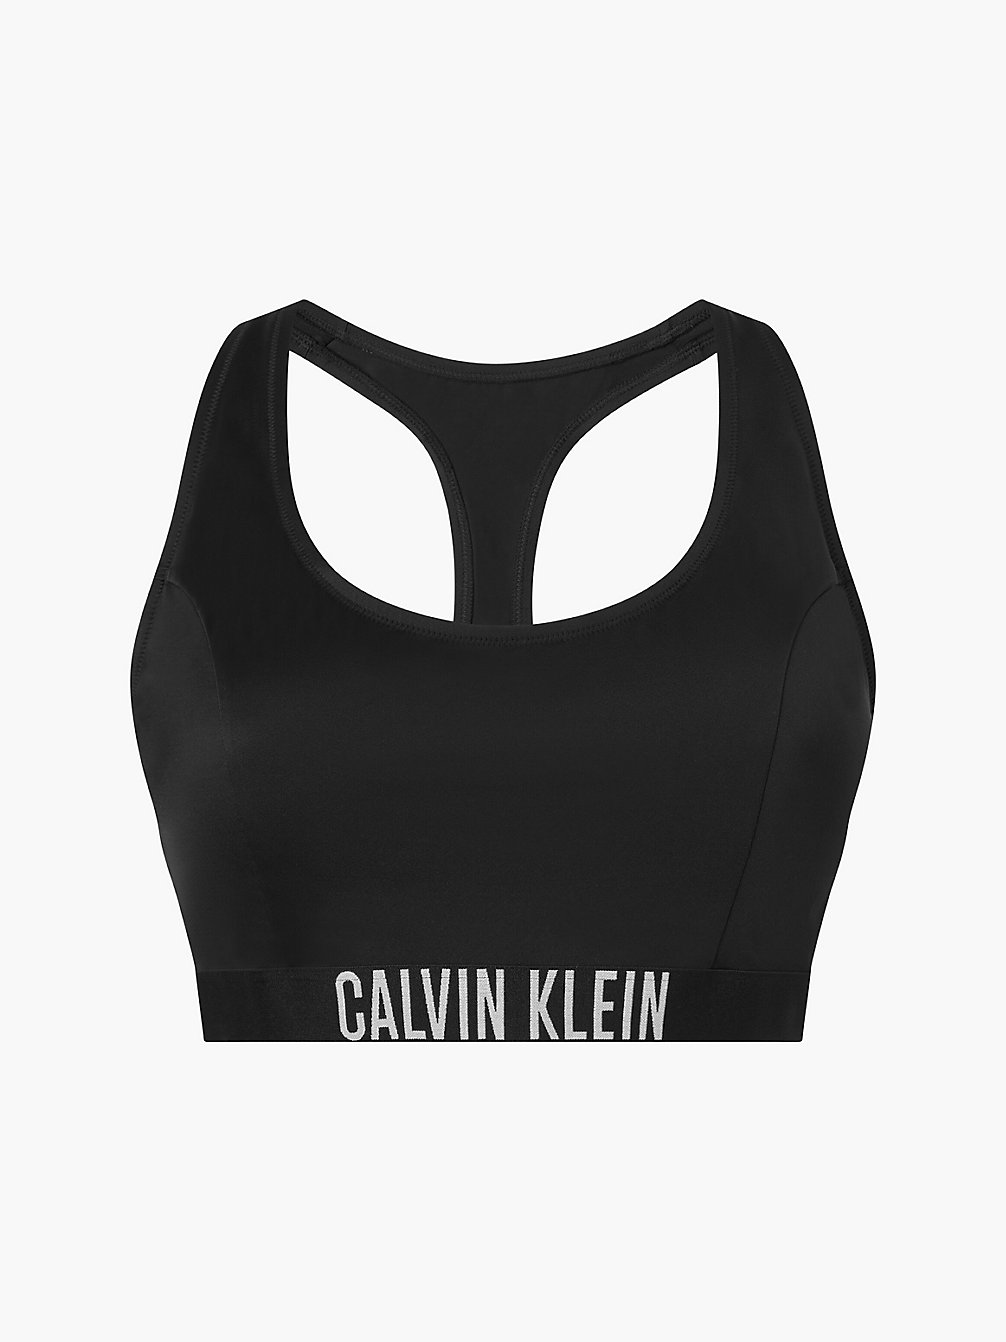 PVH BLACK > Grote Maat Bralette Bikinitop - Intense Power > undefined dames - Calvin Klein